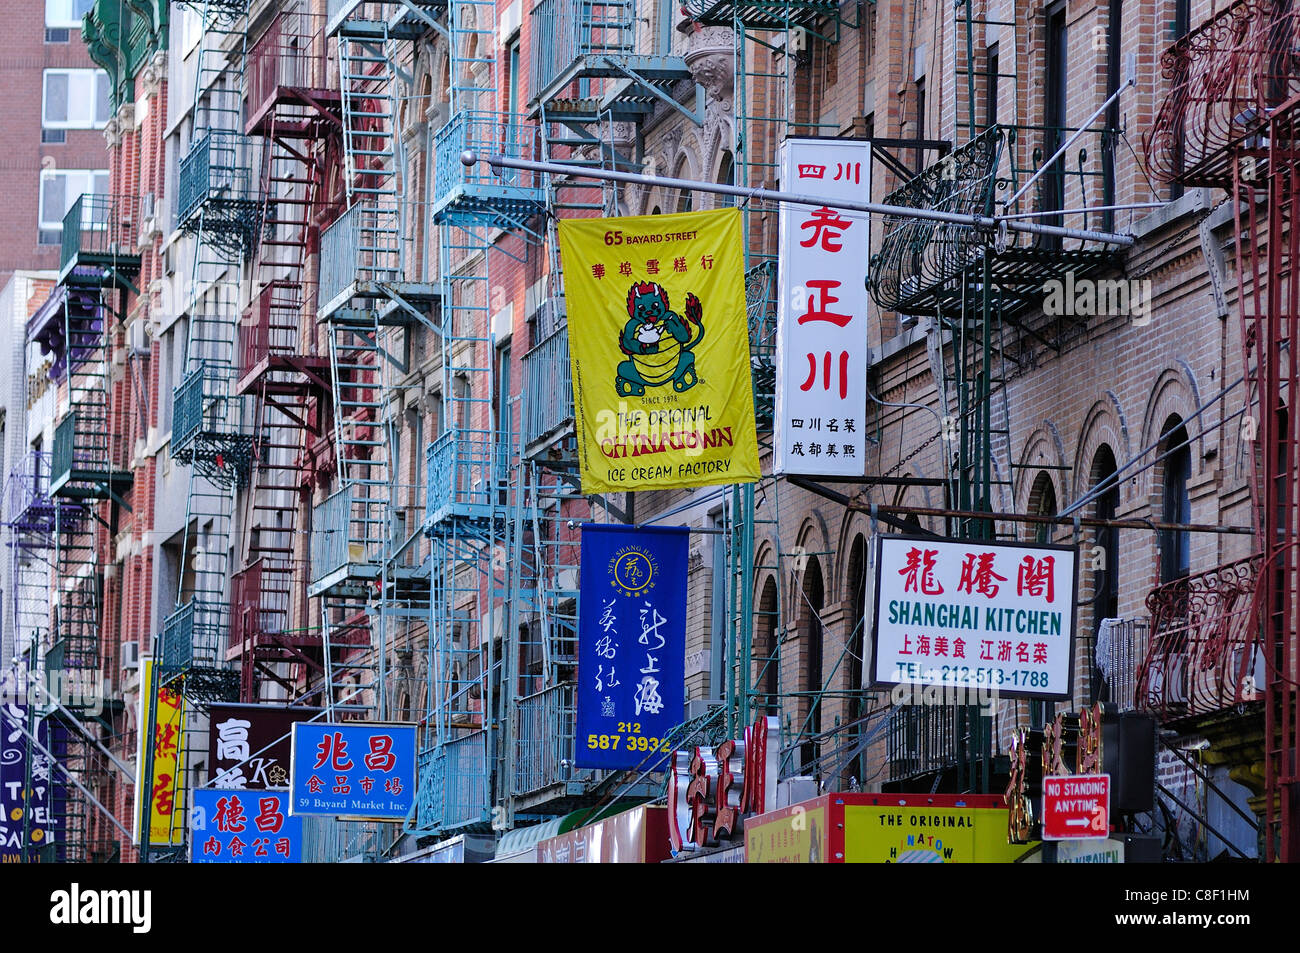 Chinatown, Little Italy, Manhattan, New York, USA, United States, America, facades Stock Photo